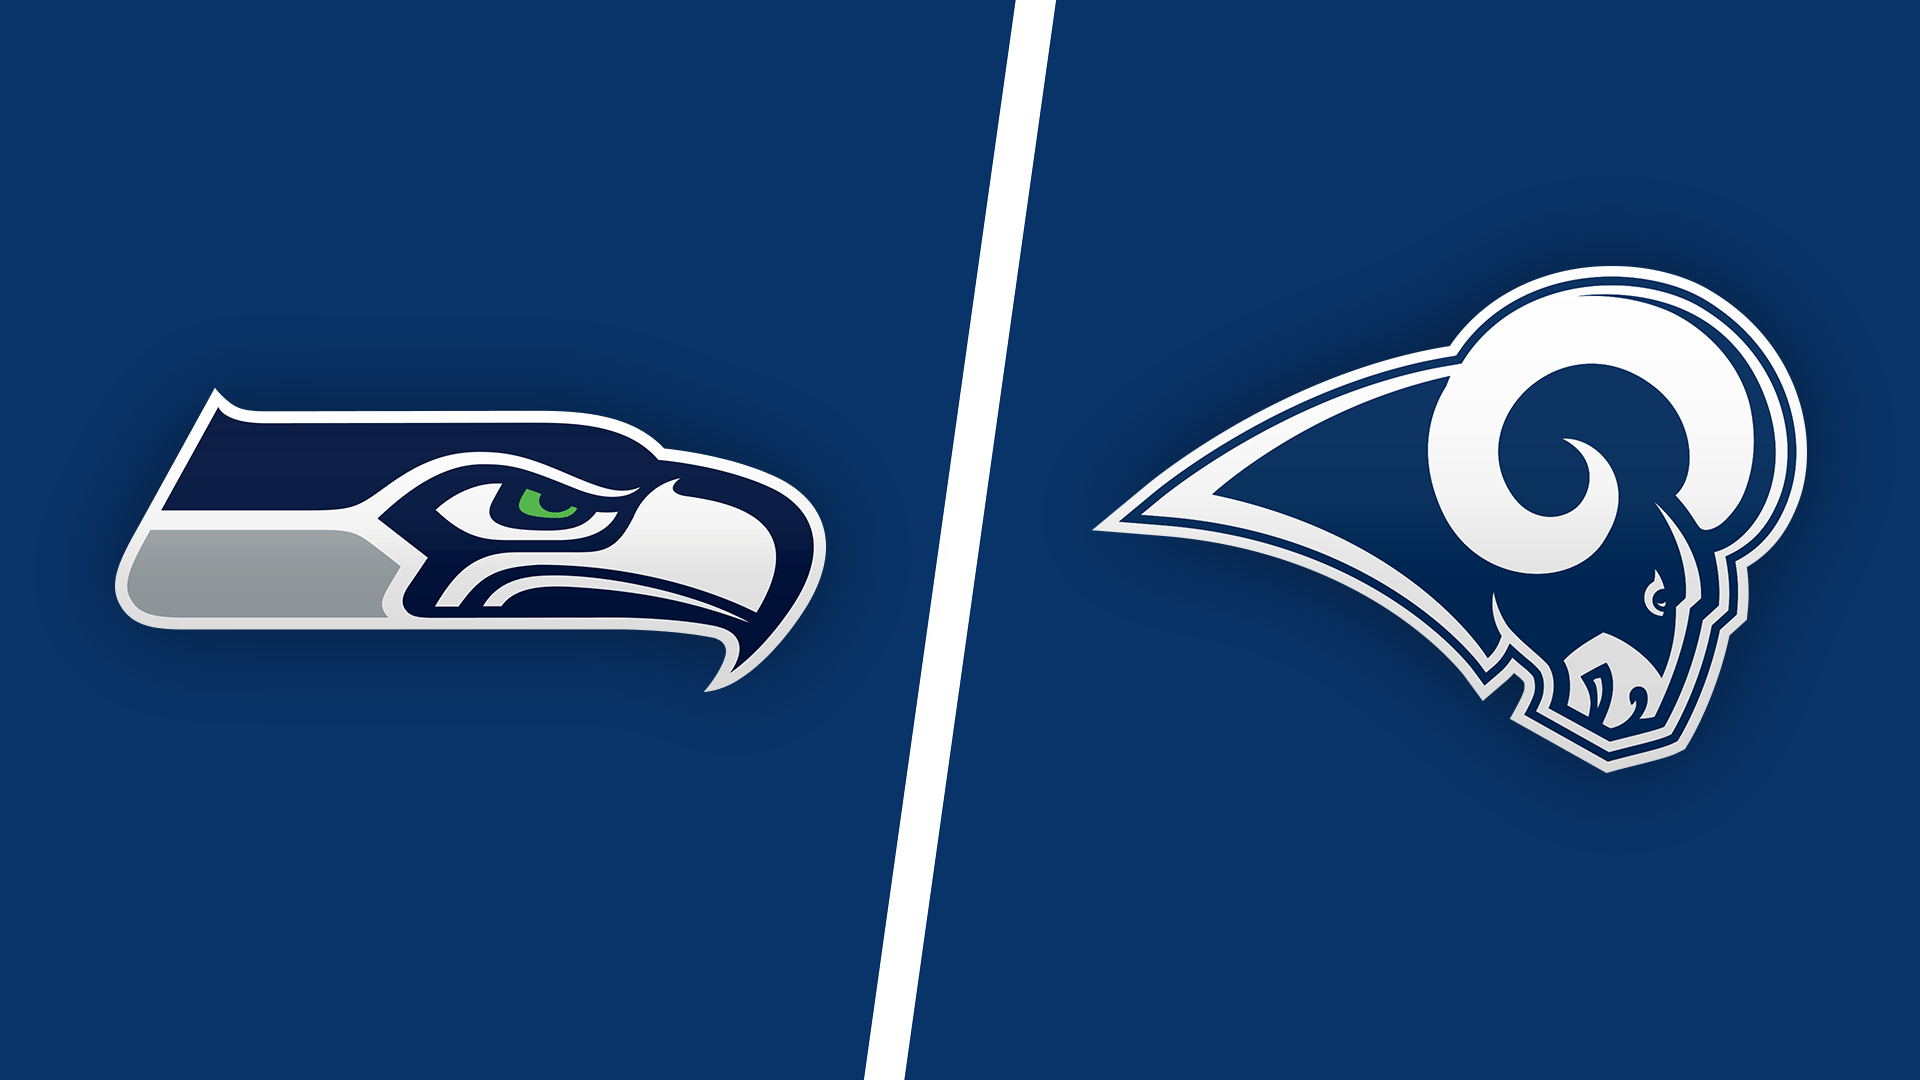 Video!! Seahawks Vs Rams Live Video Stream HD NFL Game